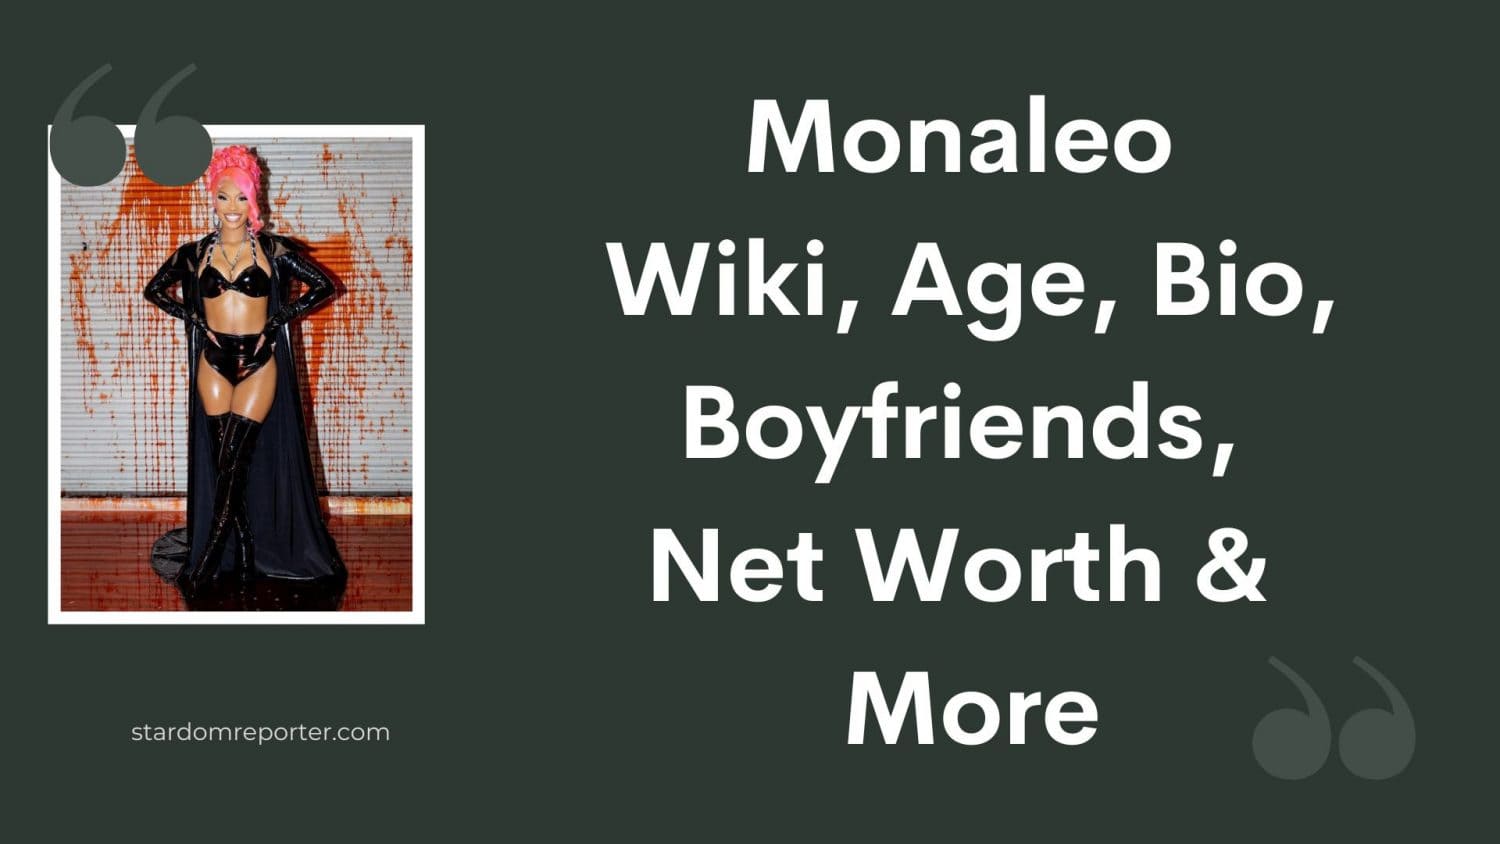 Monaleo Wiki, Age, Bio, Boyfriends, Net Worth & More - 17